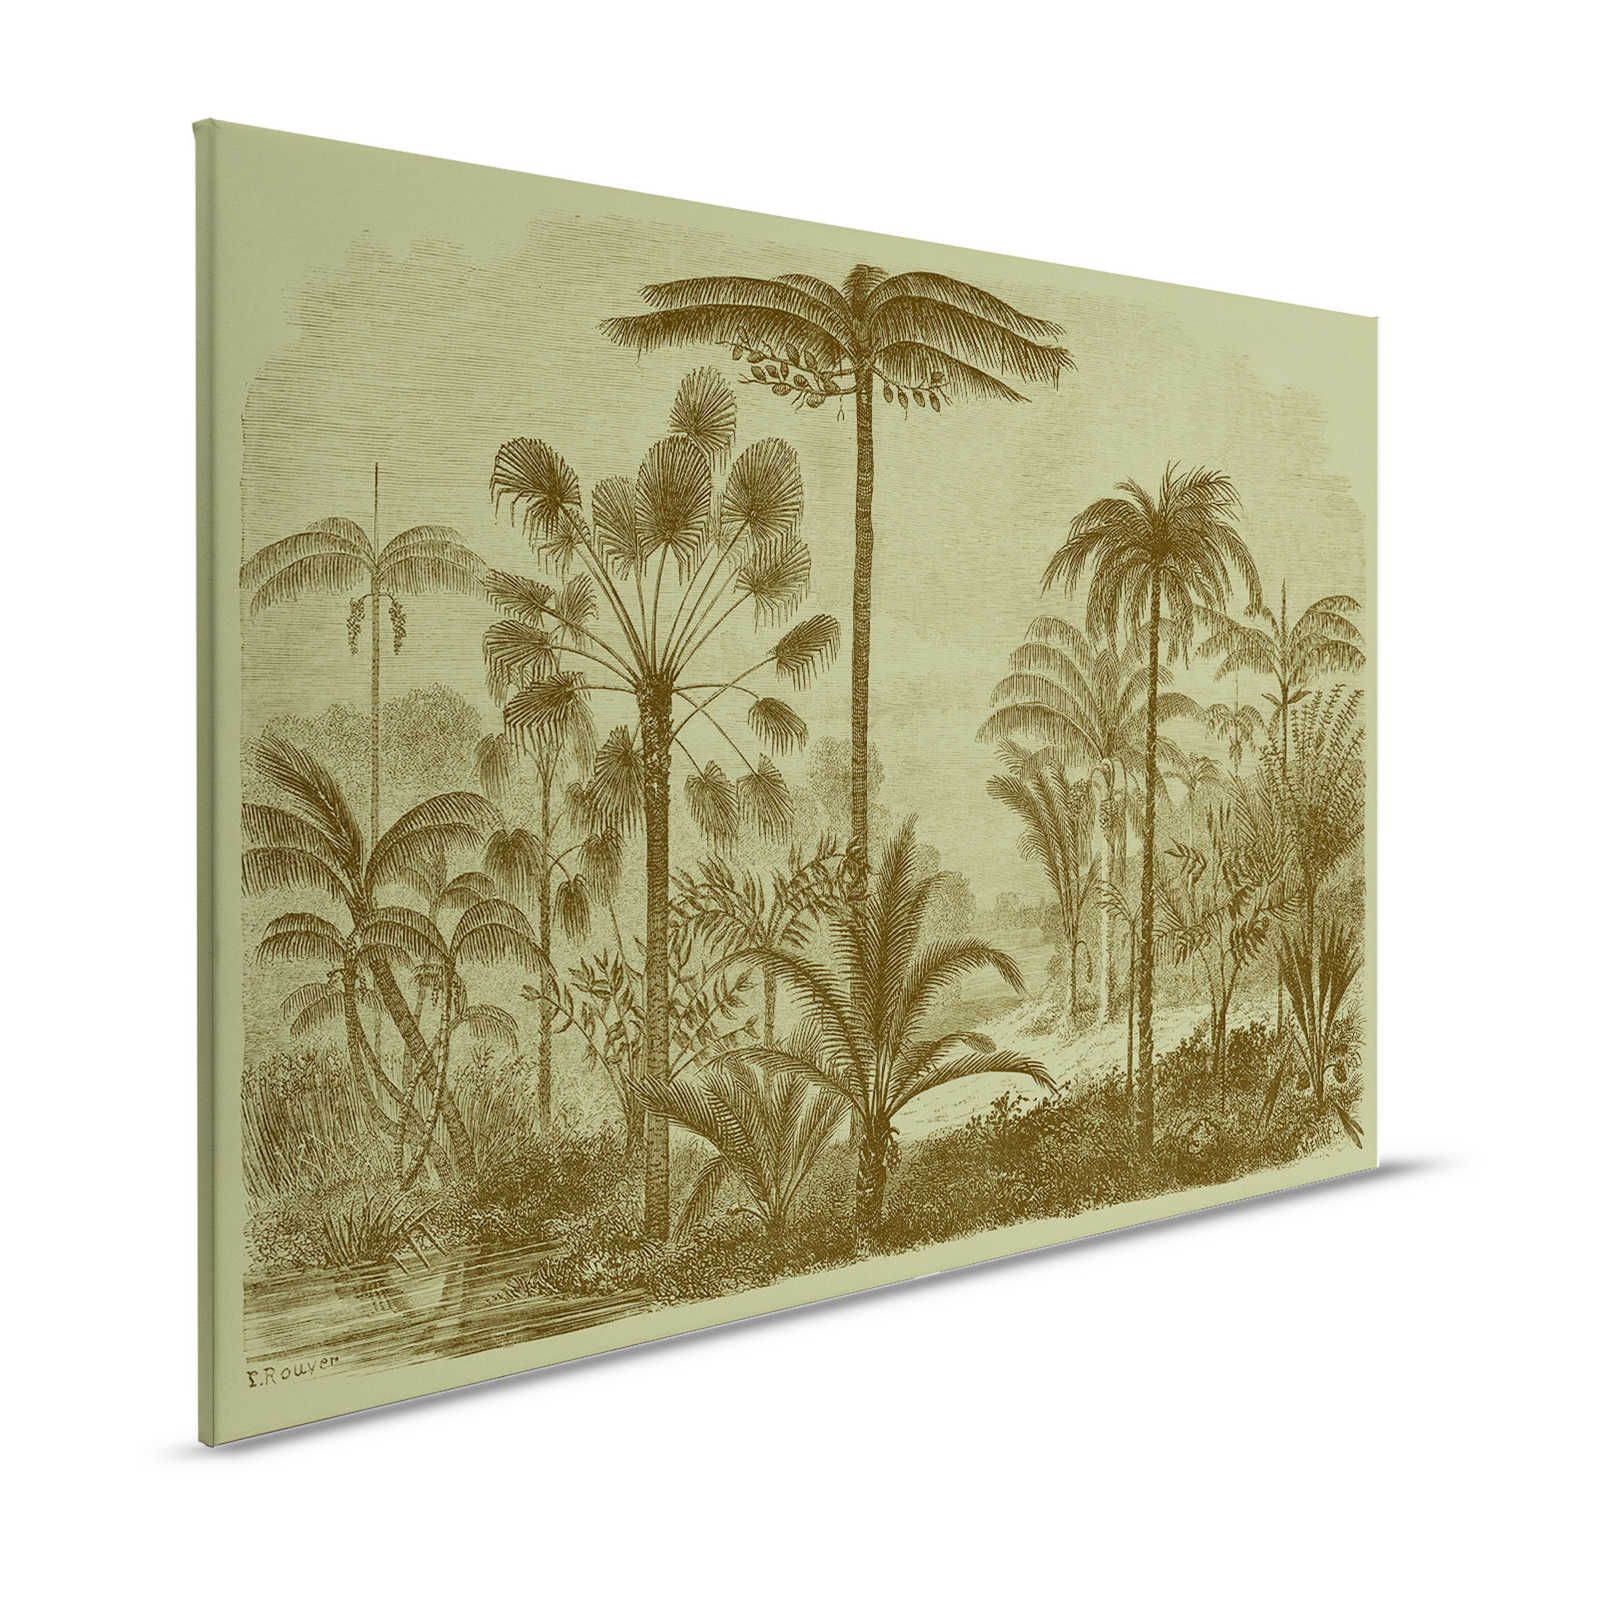 Jurassic 1 - Canvas painting Jungle motif Copperplate - 1.20 m x 0.80 m
